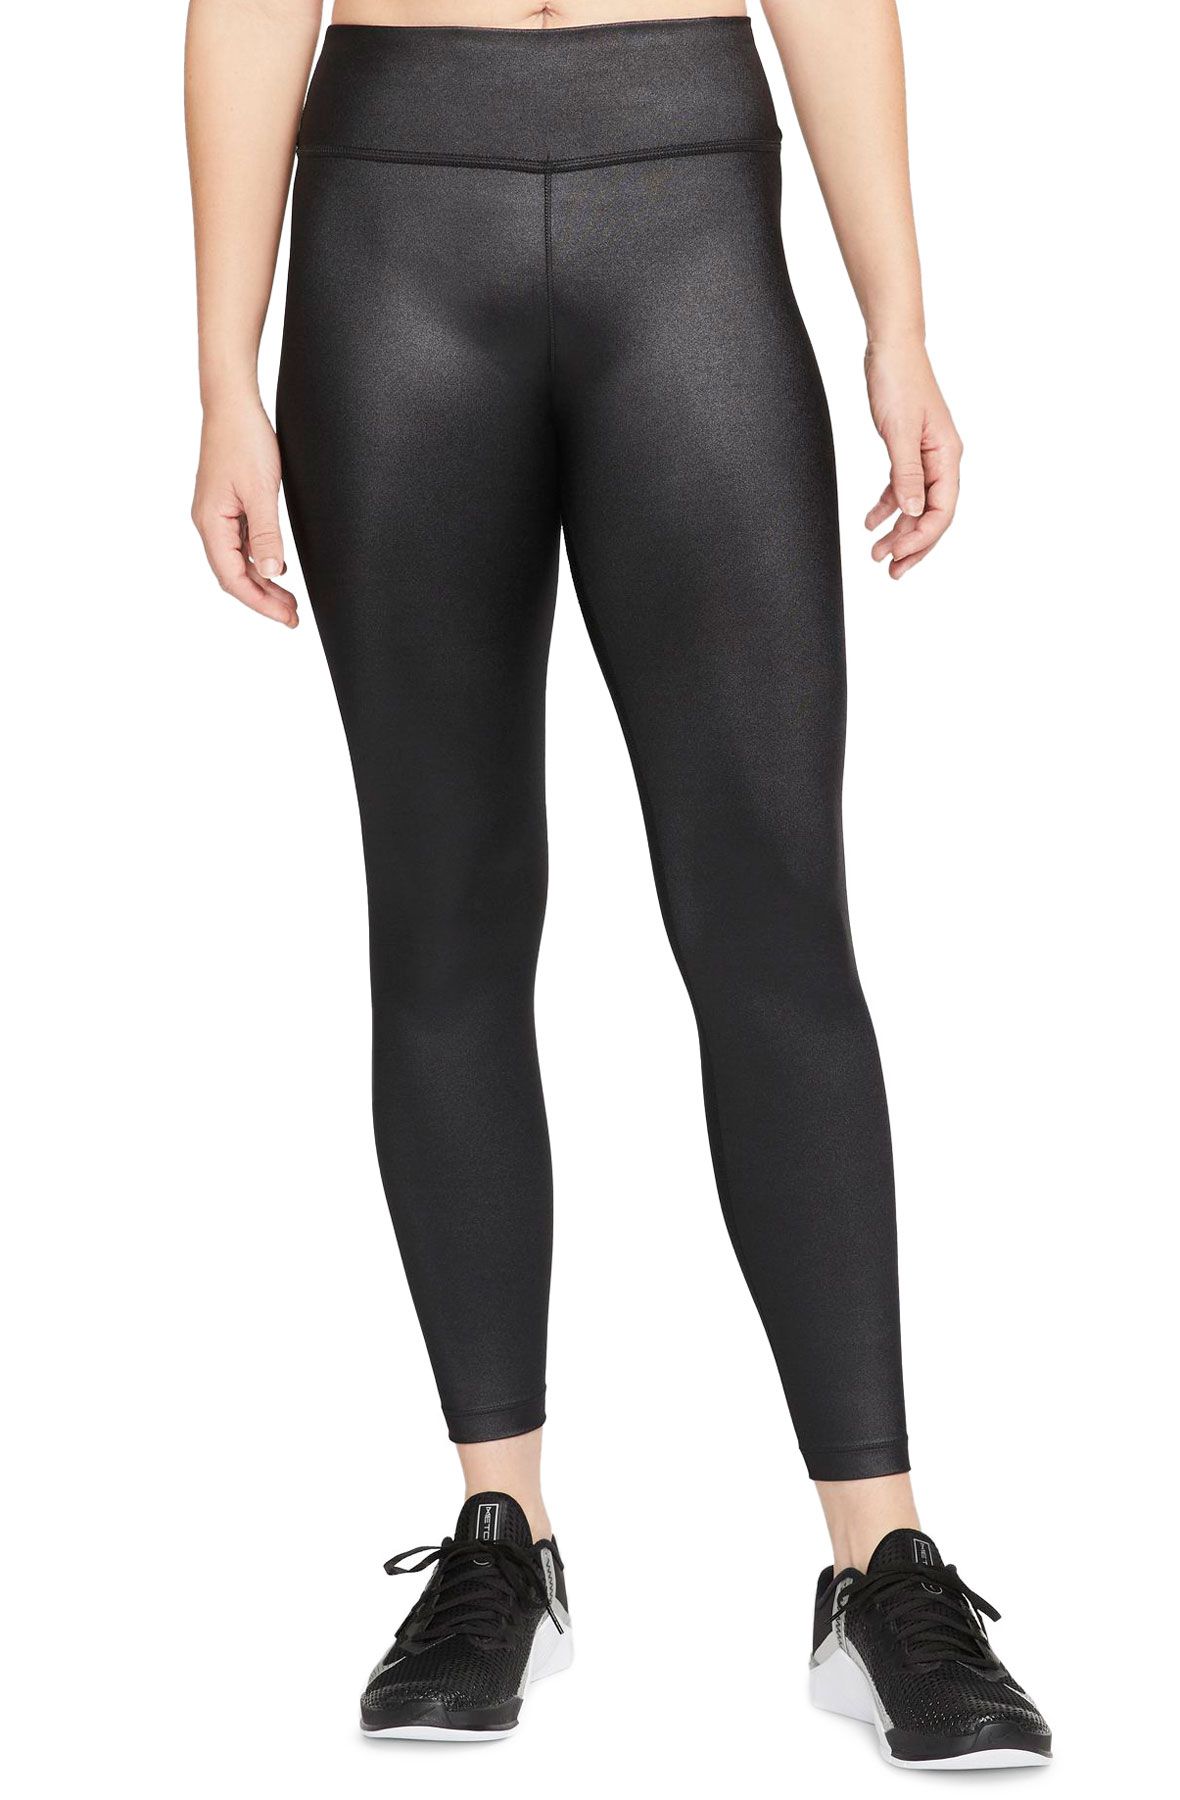 Nike Pro Women's Mid-Rise Crop Leggings DC5393-013 Size 1X (Plus Size) Black